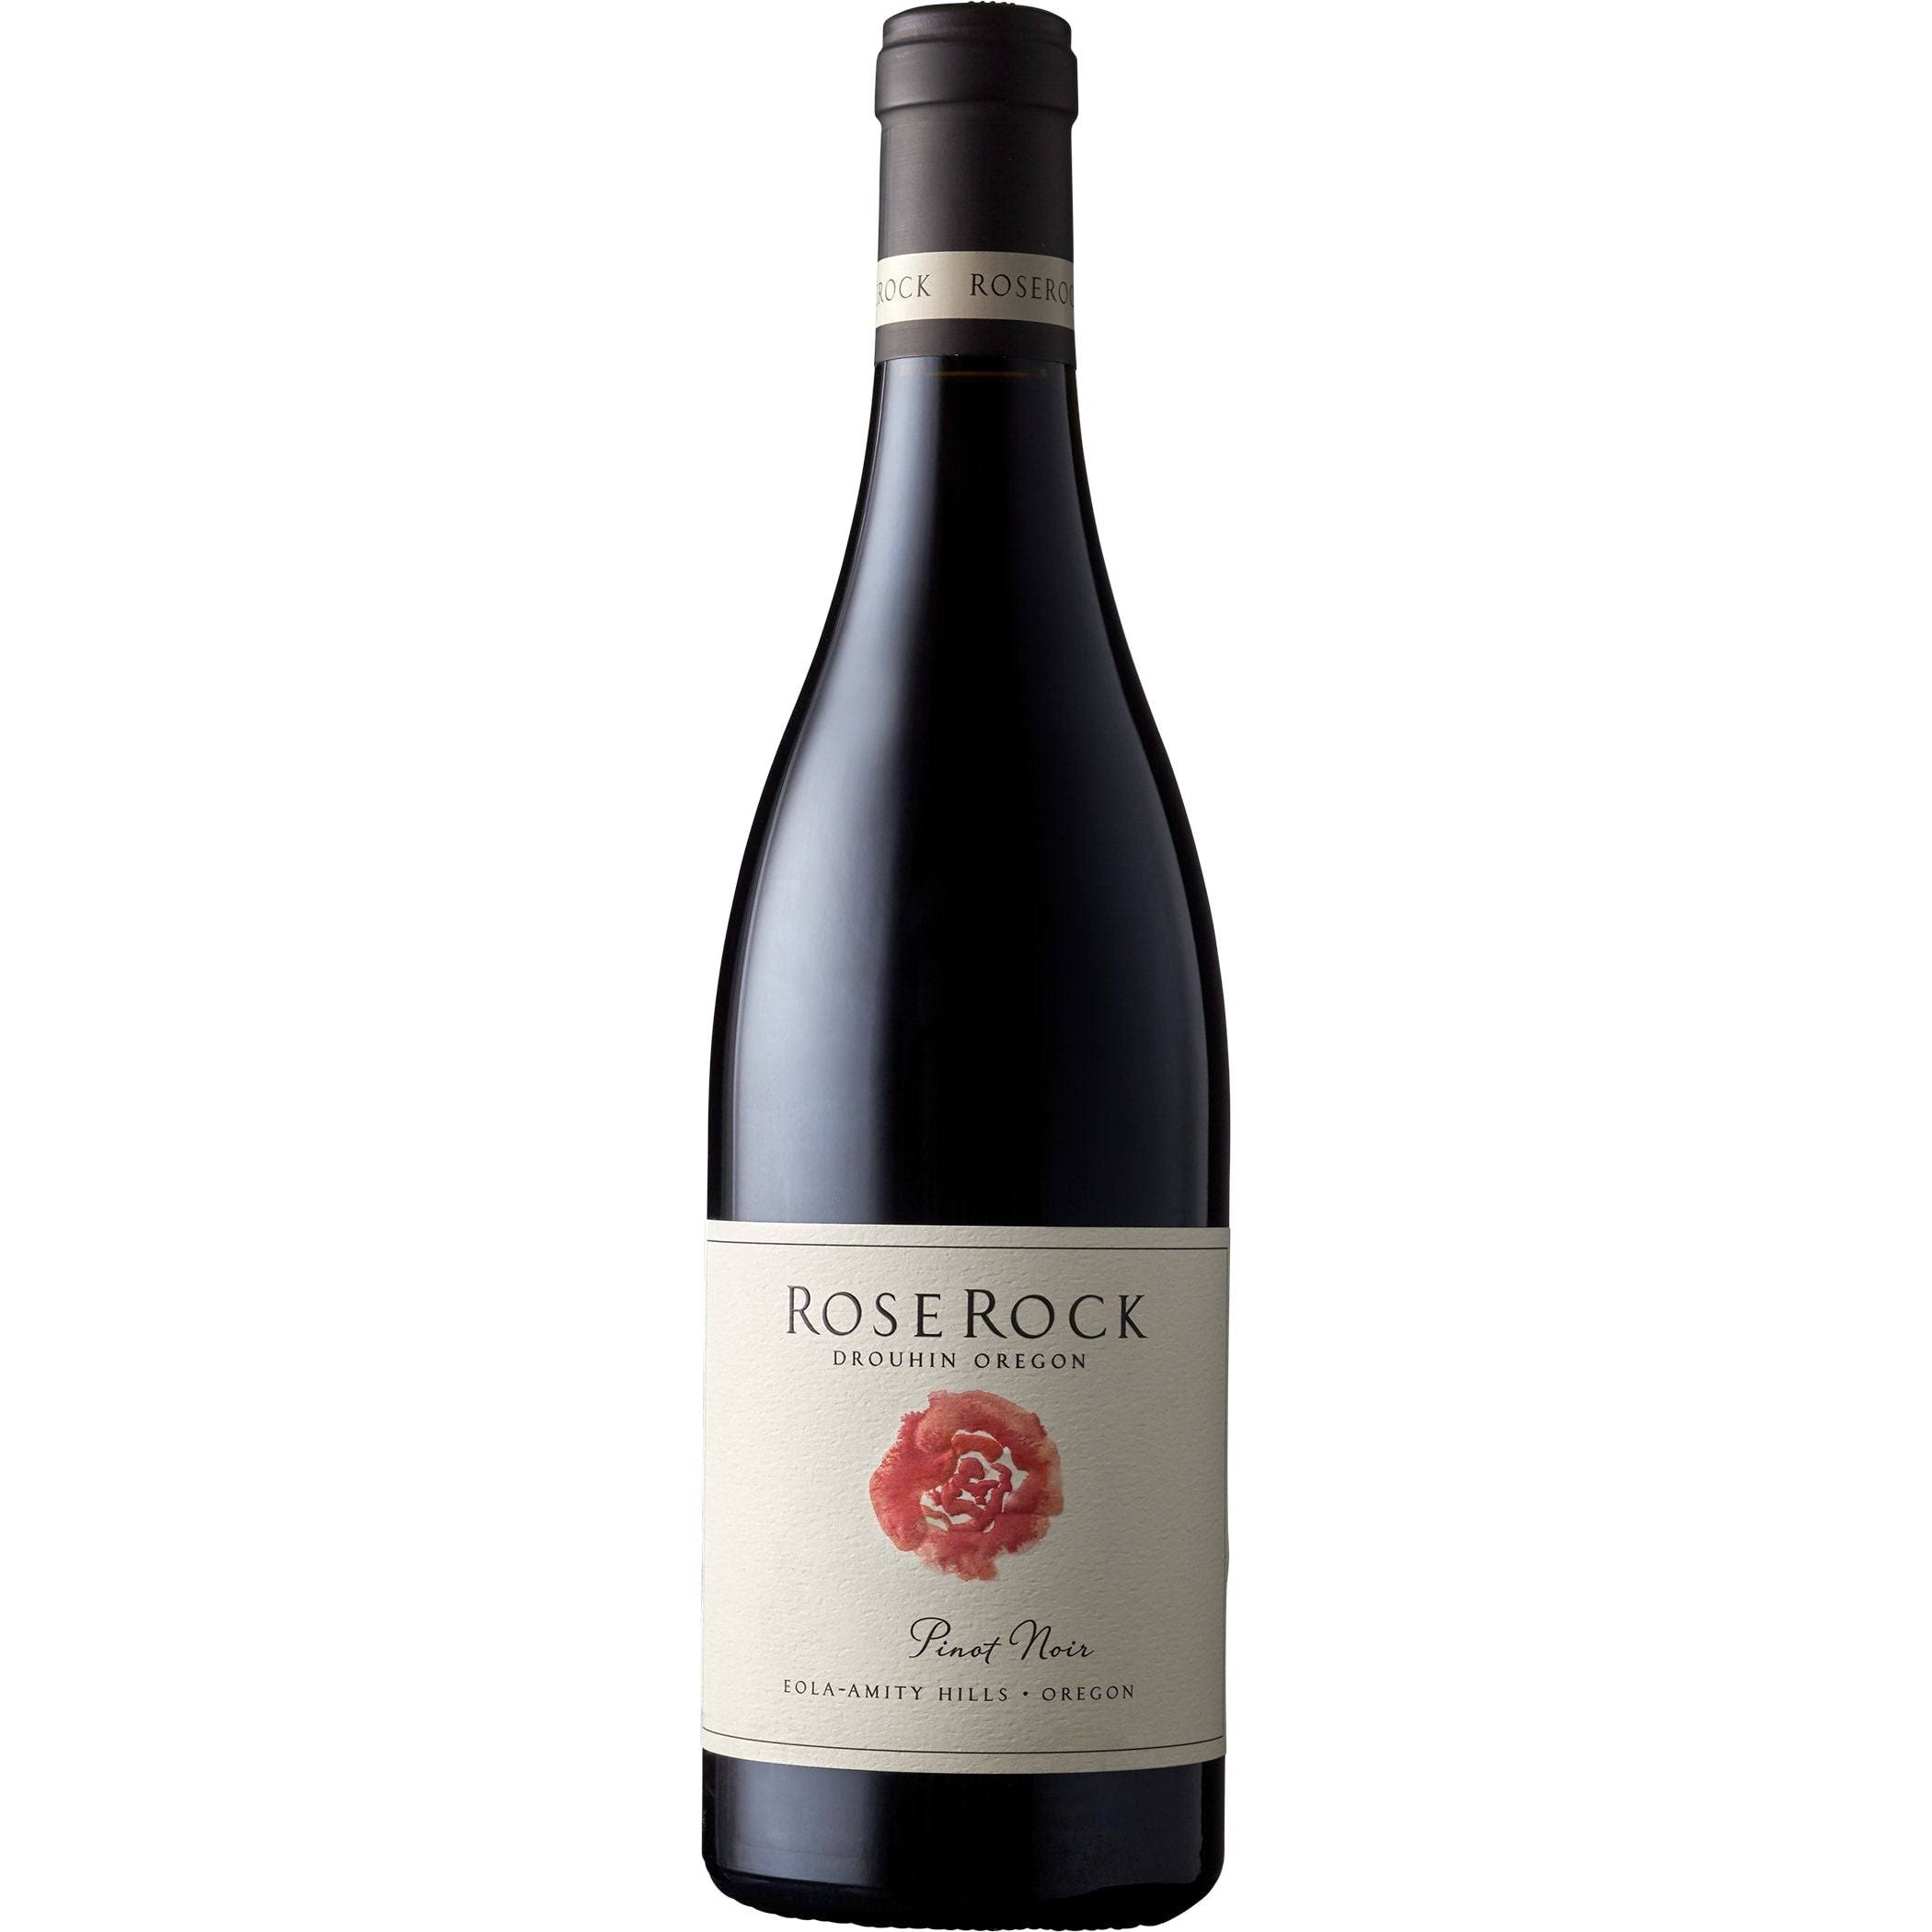 Domaine Drouhin Oregon Roserock Pinot Noir 2018